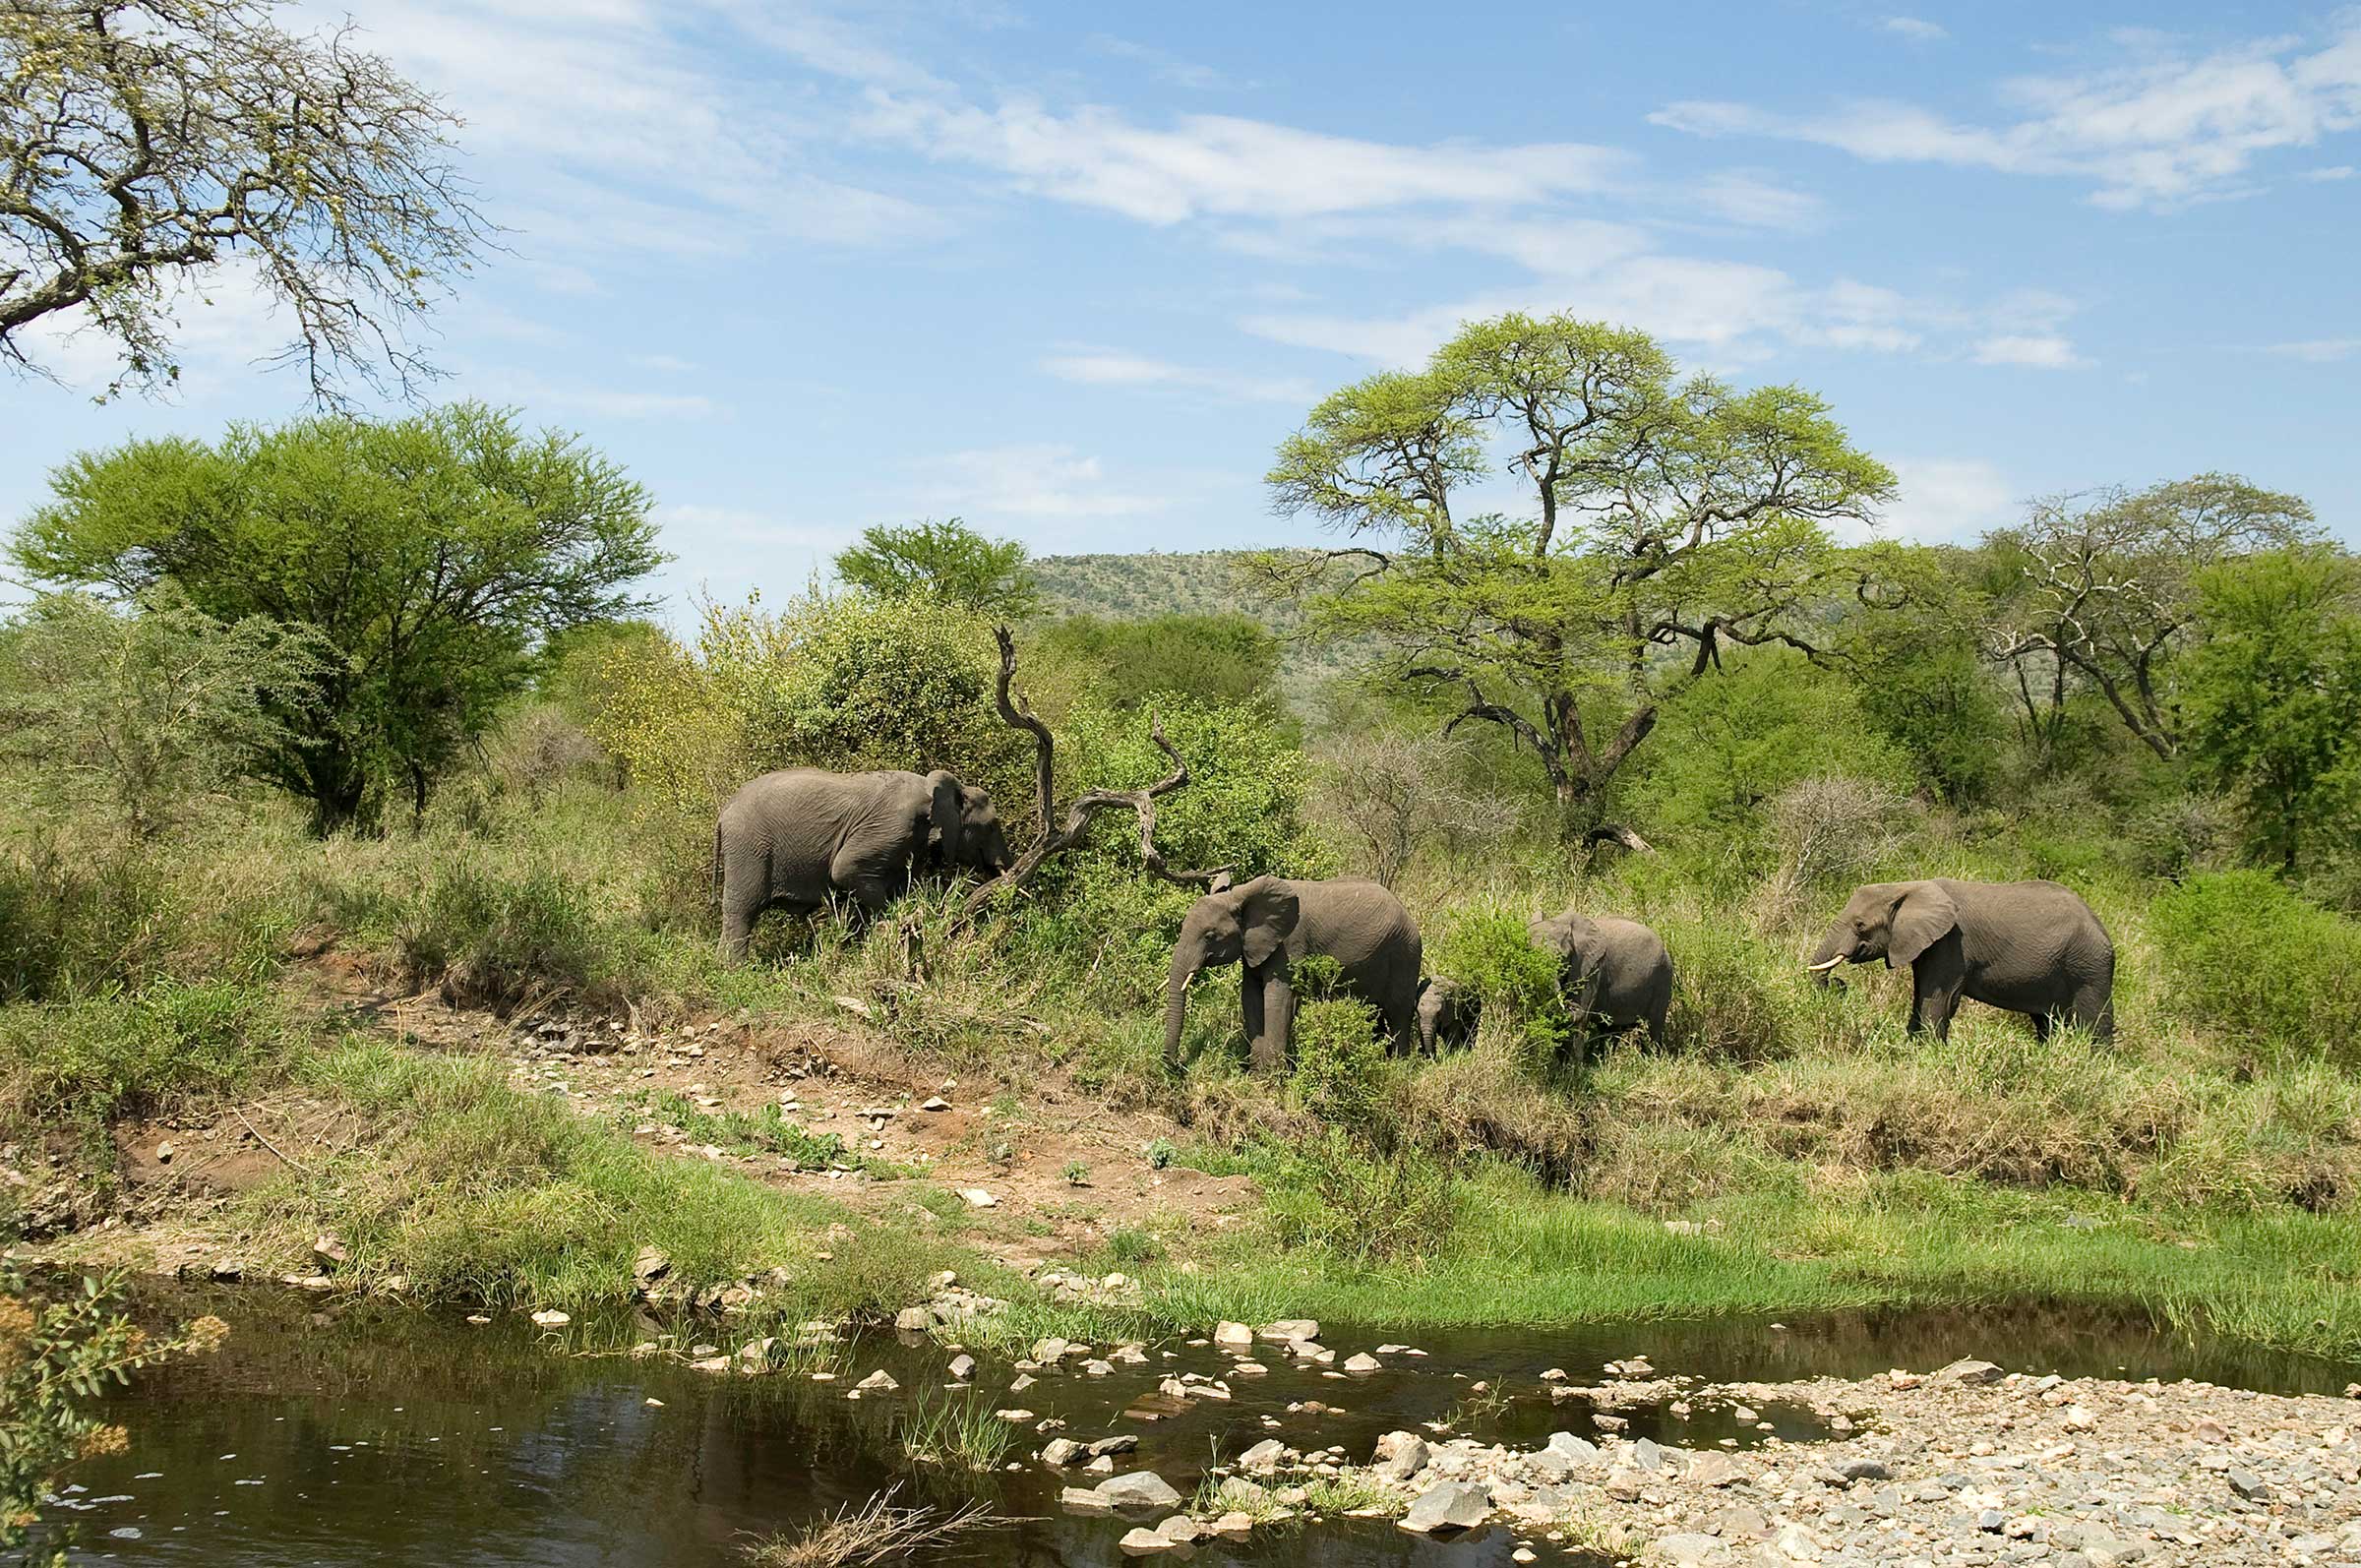 January Africa Safari - Tanzania